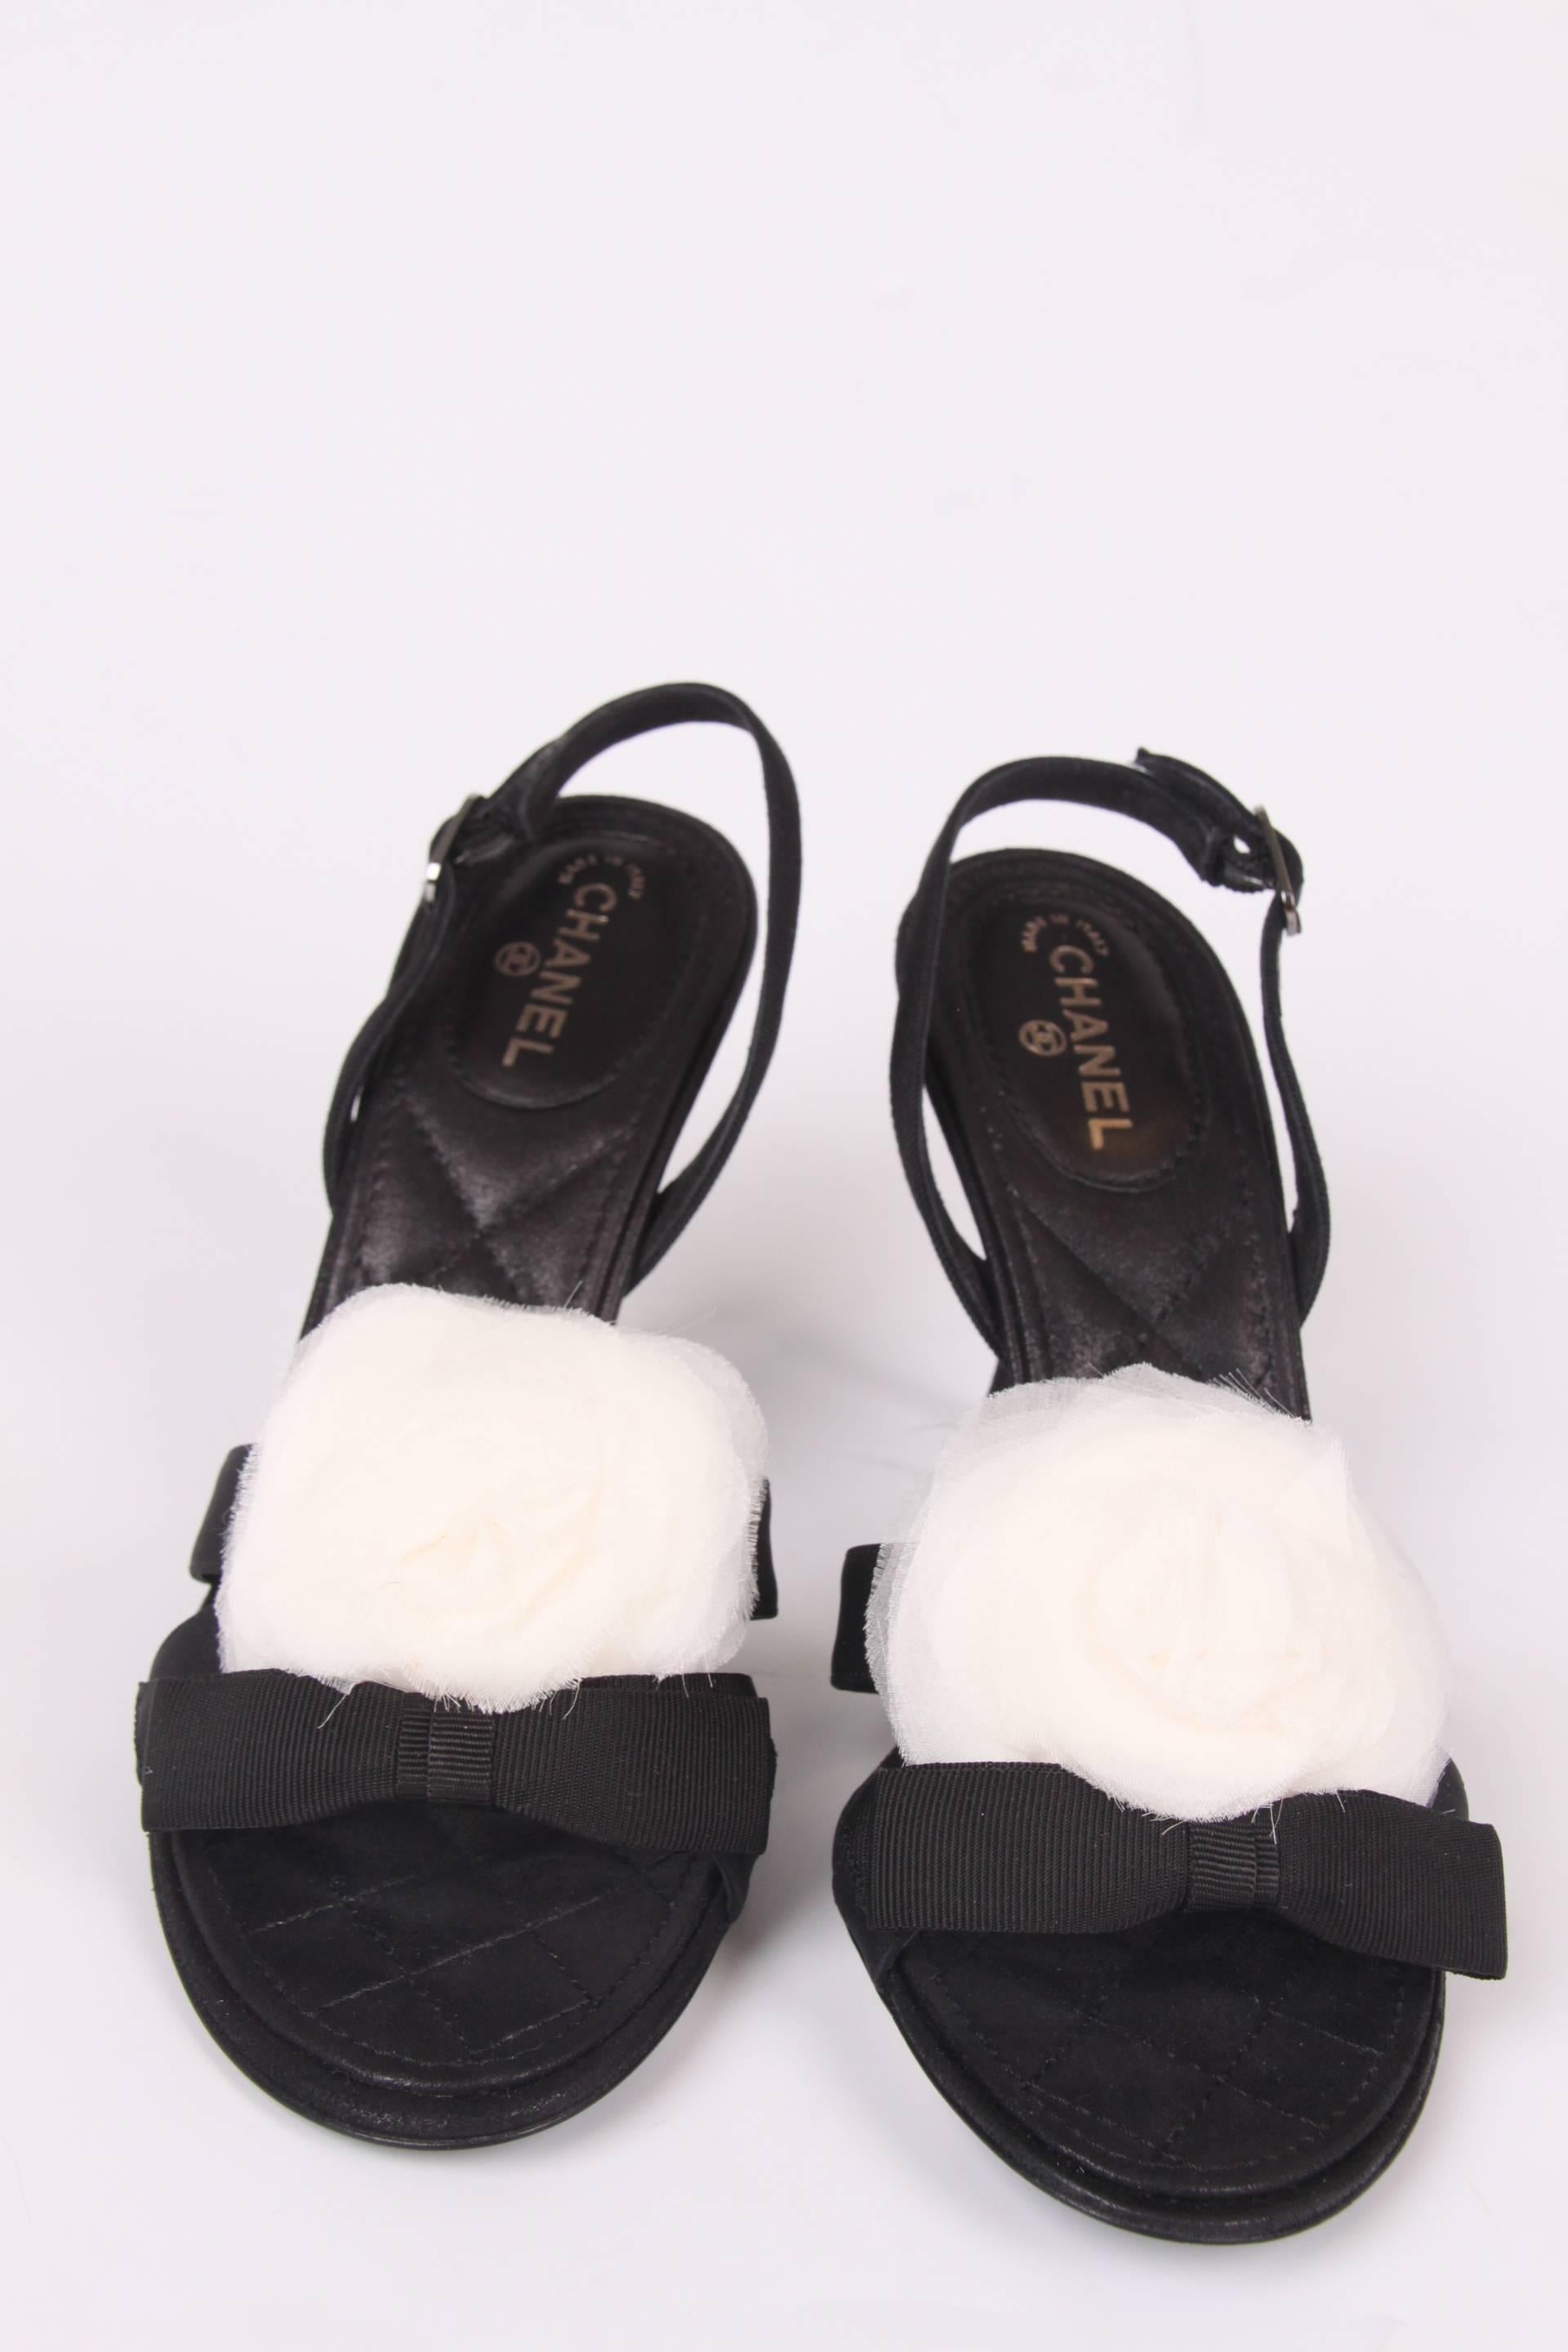 Women's Chanel Camellia Sandals - black & white